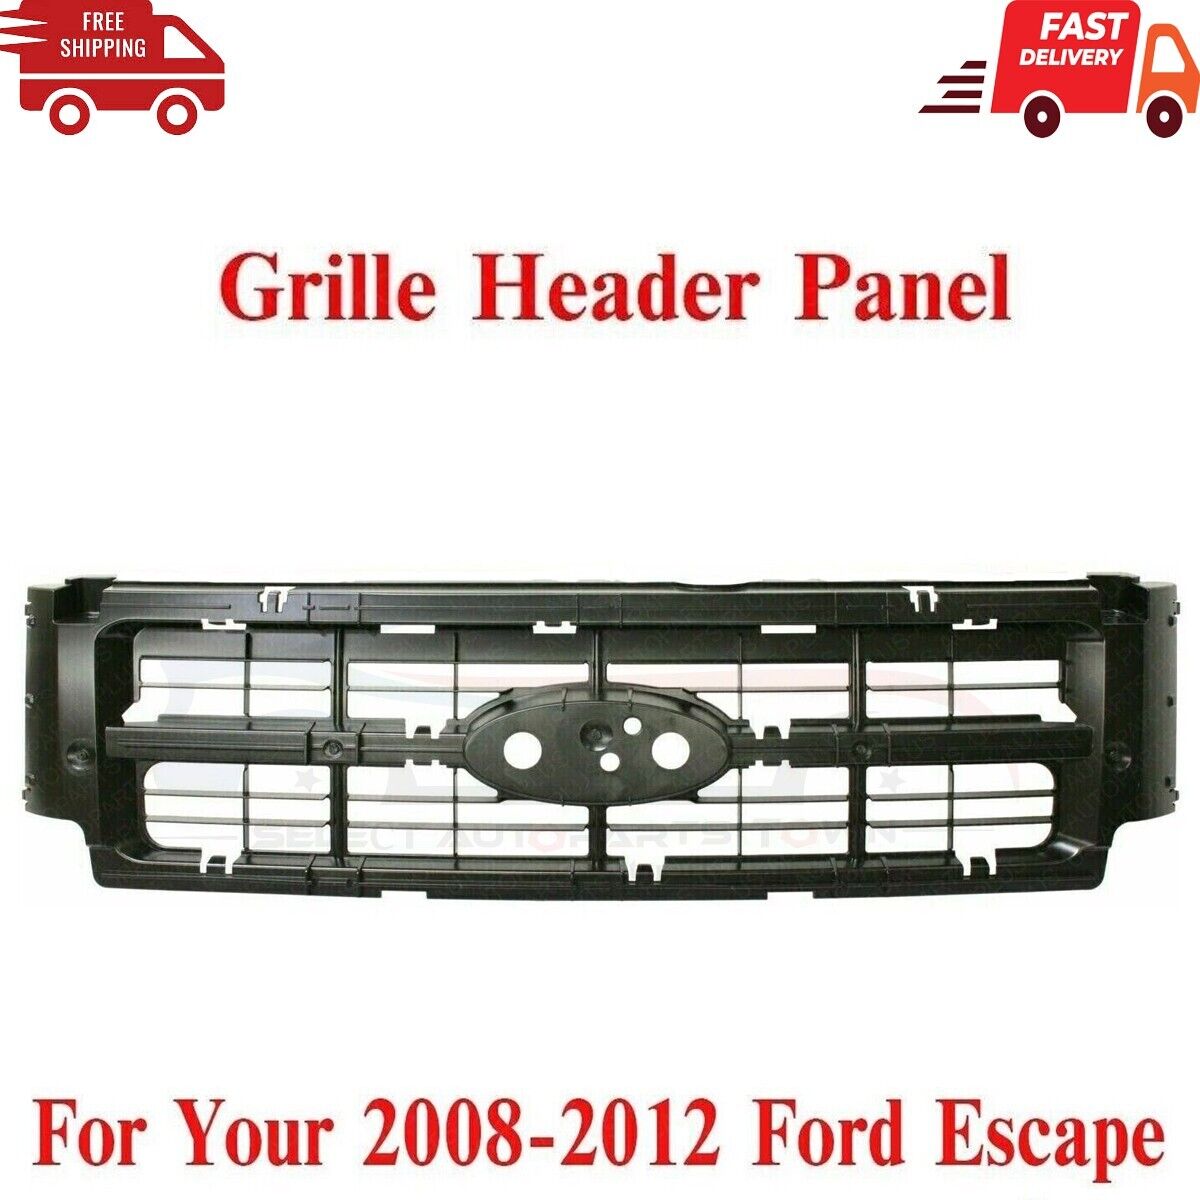 New Fits 2008-2012 Ford Escape Front Grille Header Panel Reinforcement Plastic